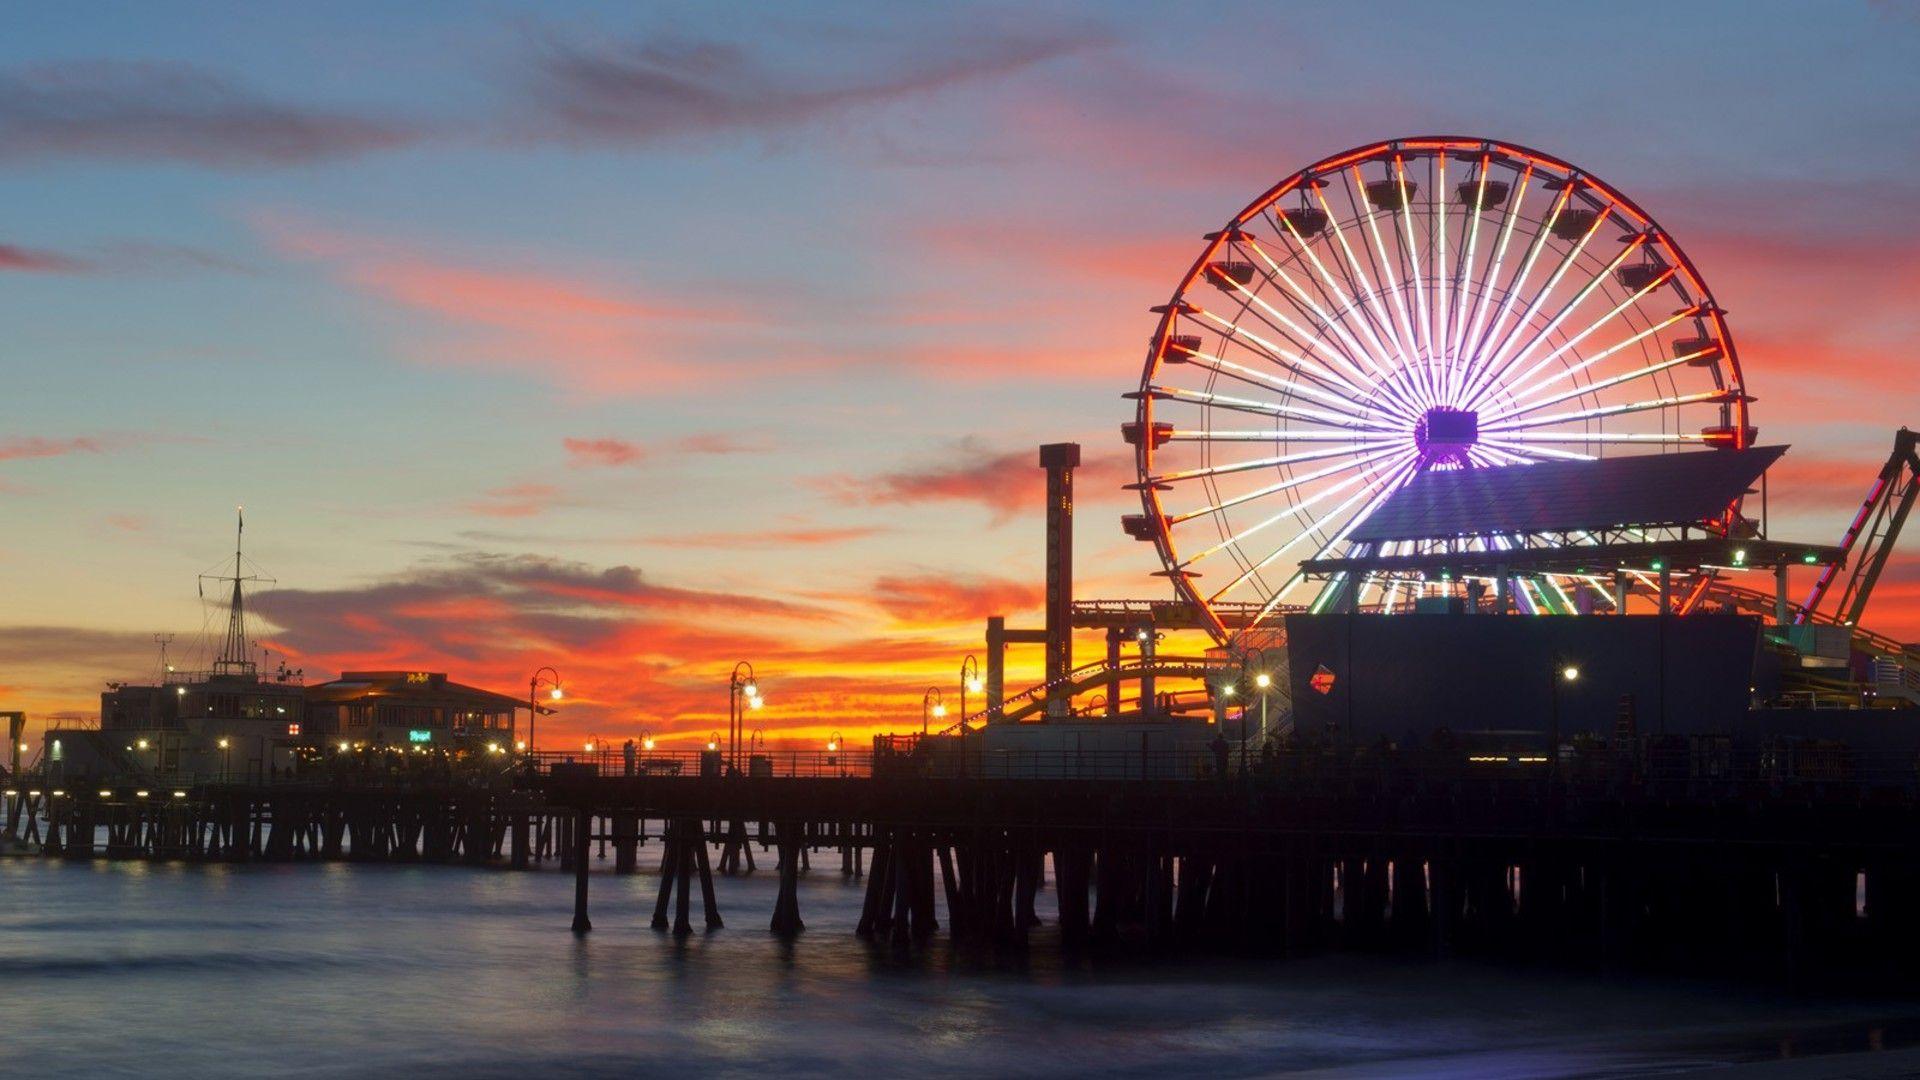 Sunset pier california santa monica wallpaper